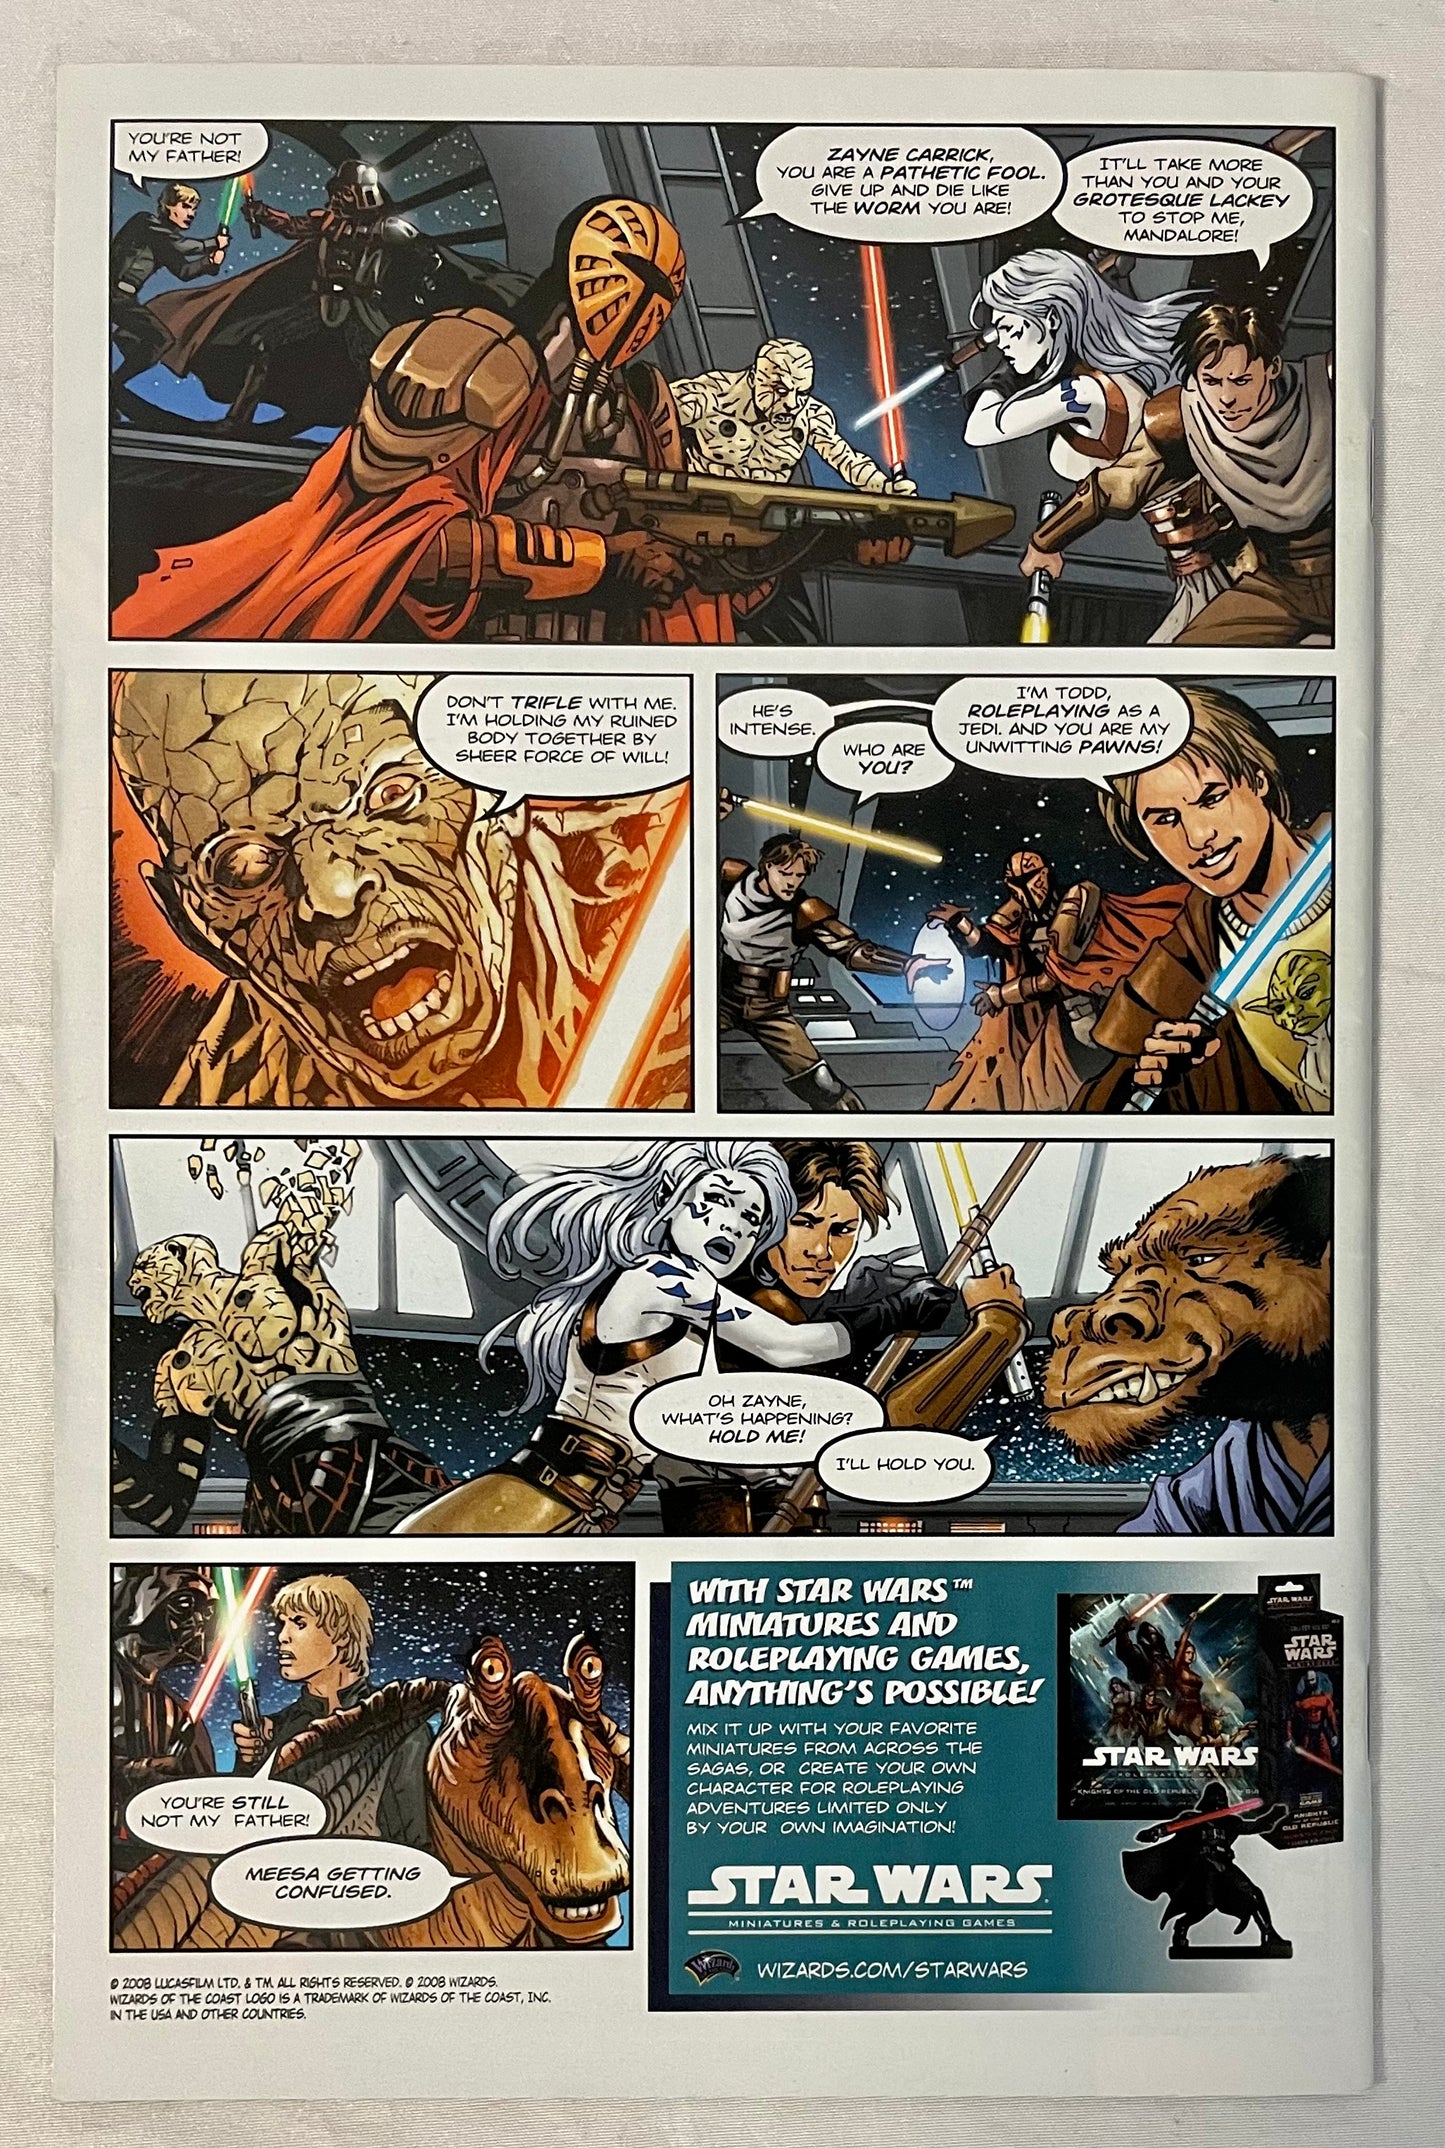 Dark Horse Comics Star Wars Knights Of The Old Republic #31